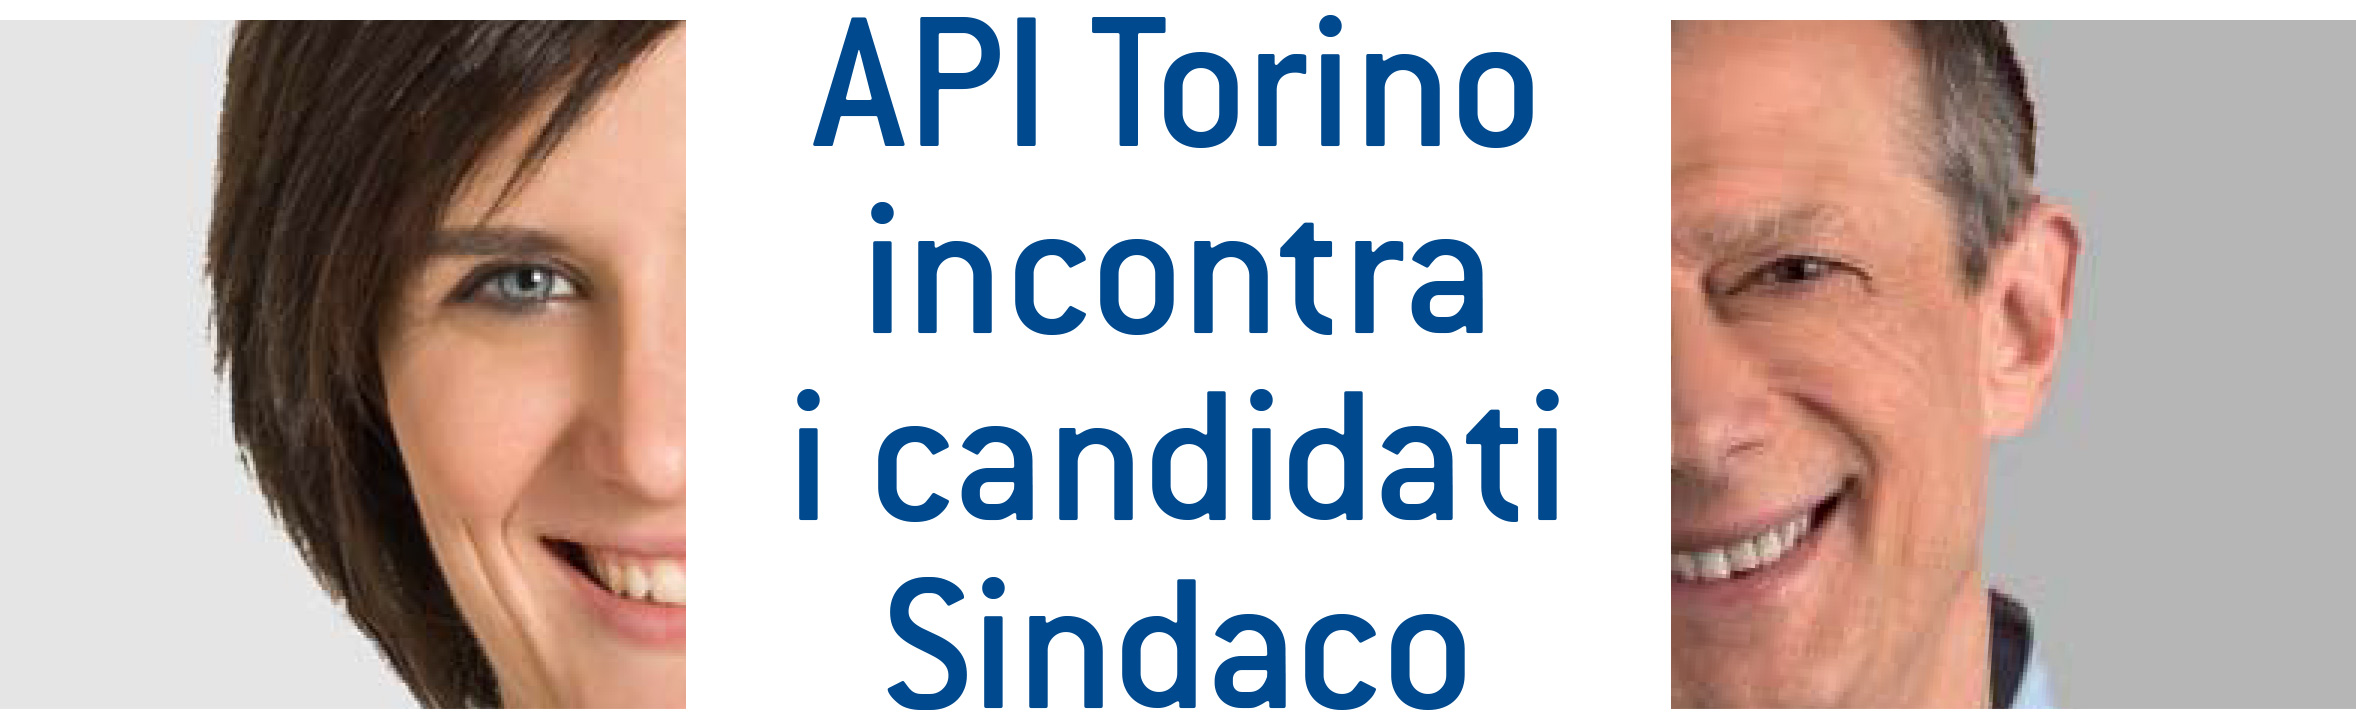 Api Torino incontra i candidati Sindaco